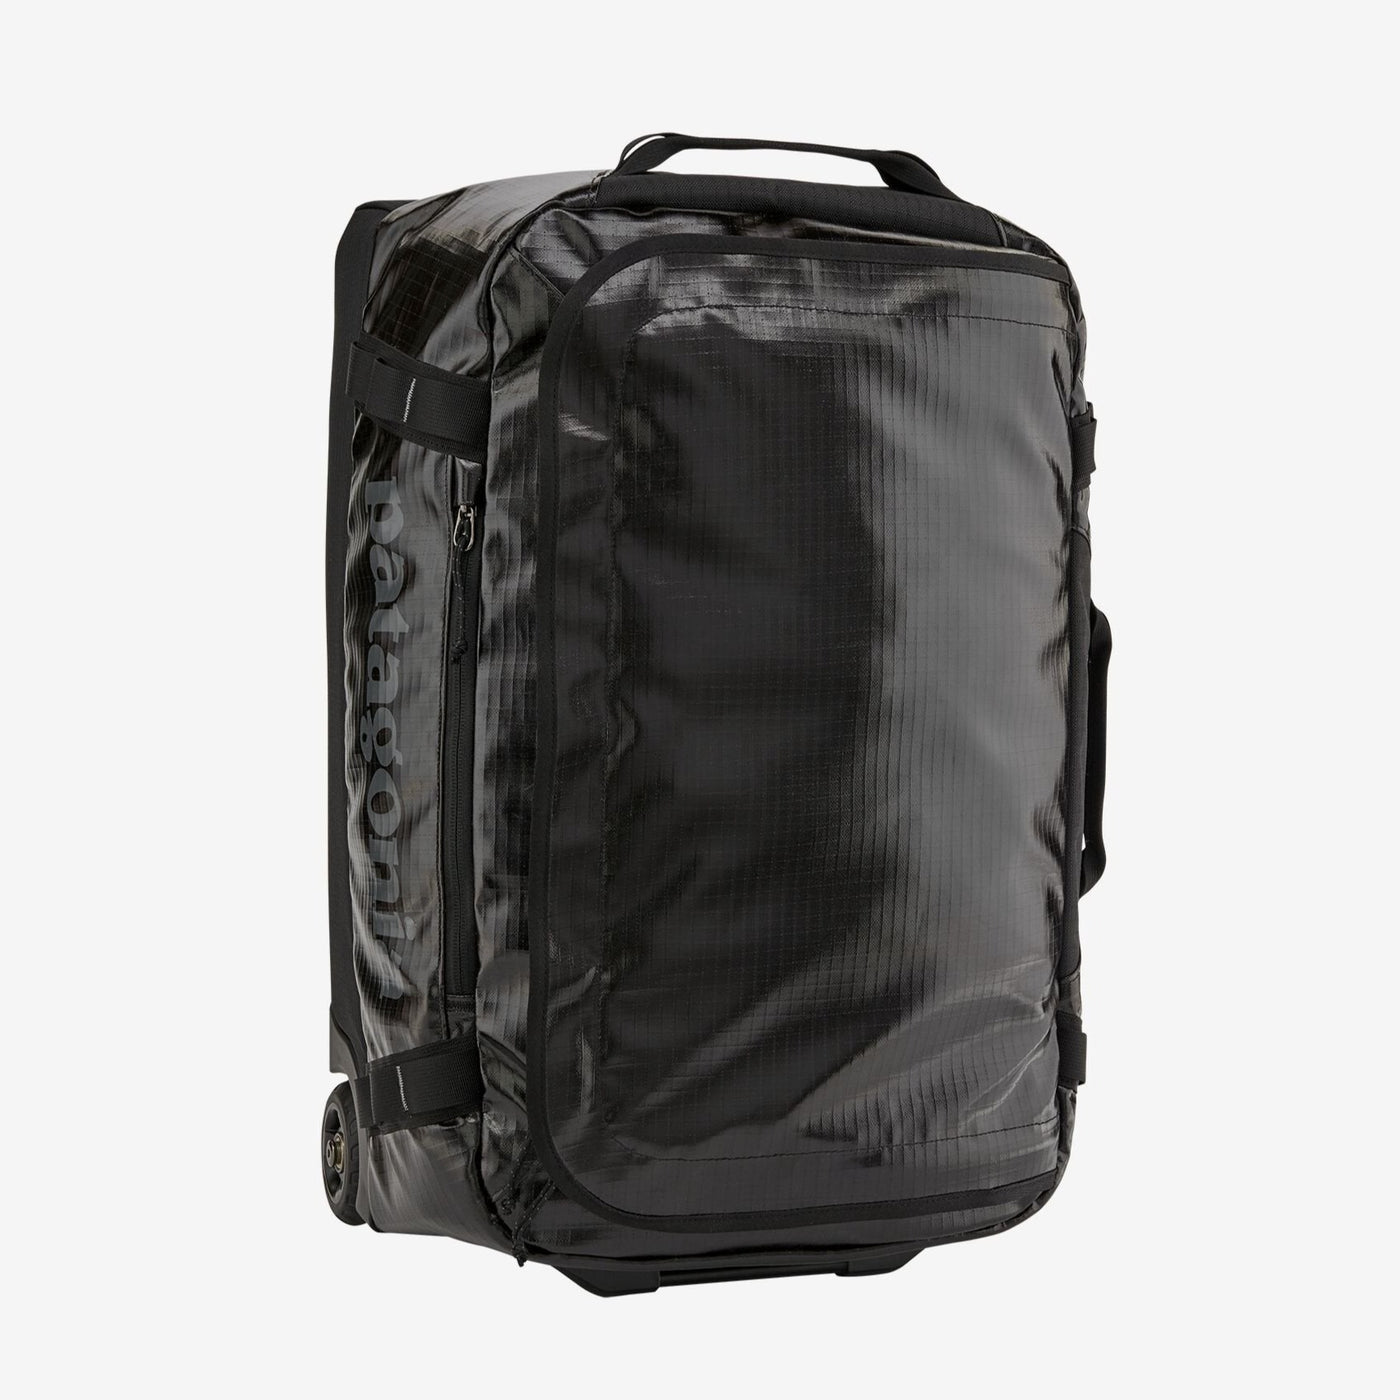 Patagonia Black Hole Wheeled Duffel Bag 40L-LUGGAGE-Black-Kevin's Fine Outdoor Gear & Apparel